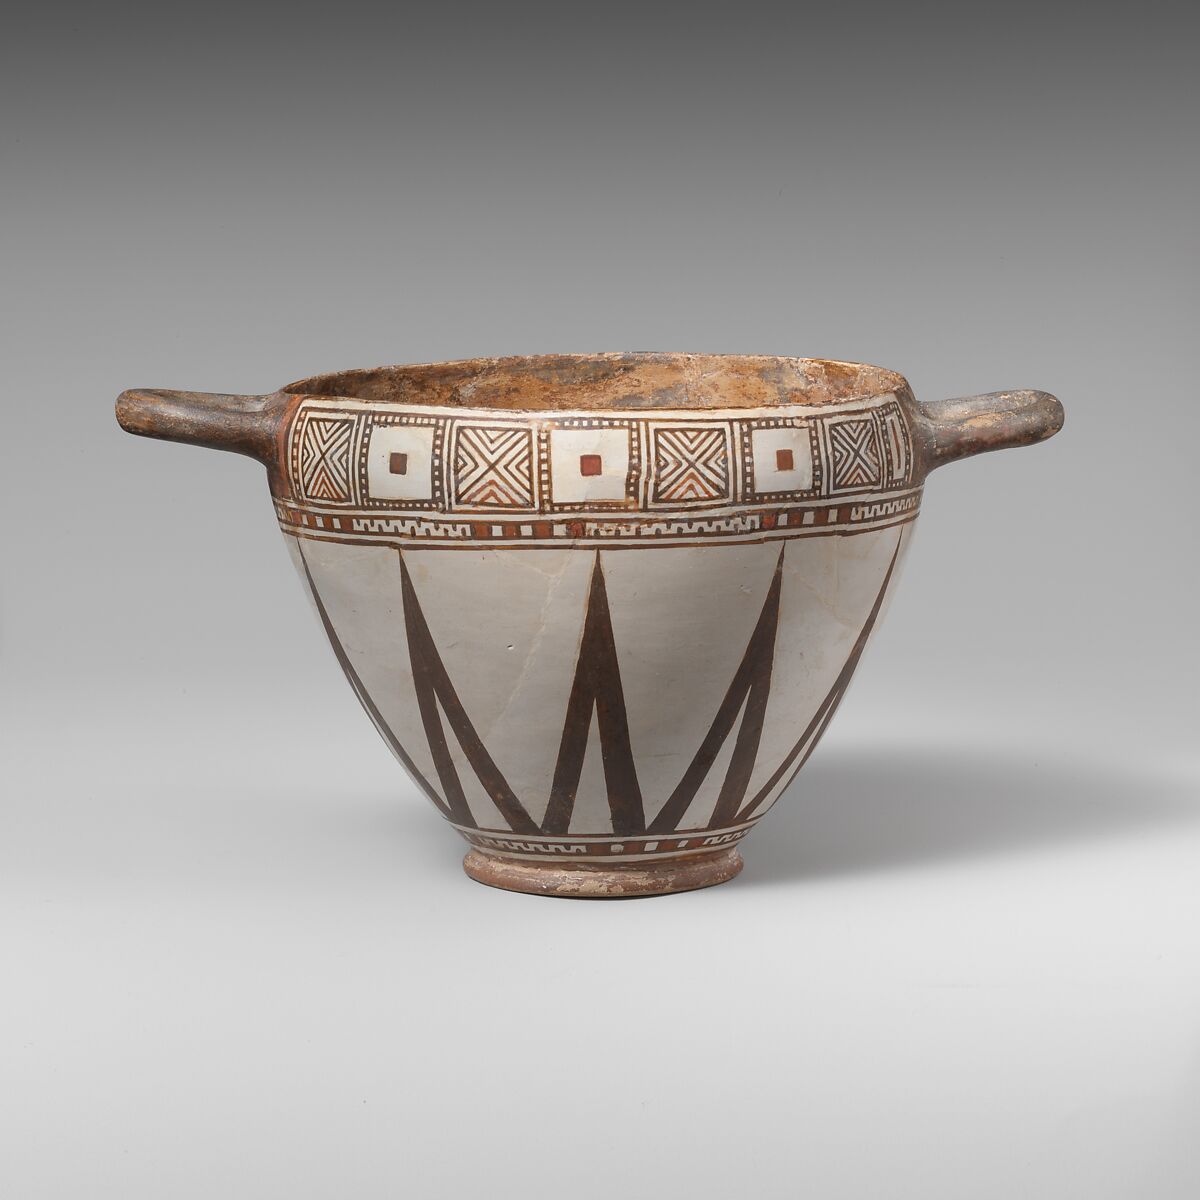 Terracotta skyphos (drinking cup), Terracotta, Lydian 